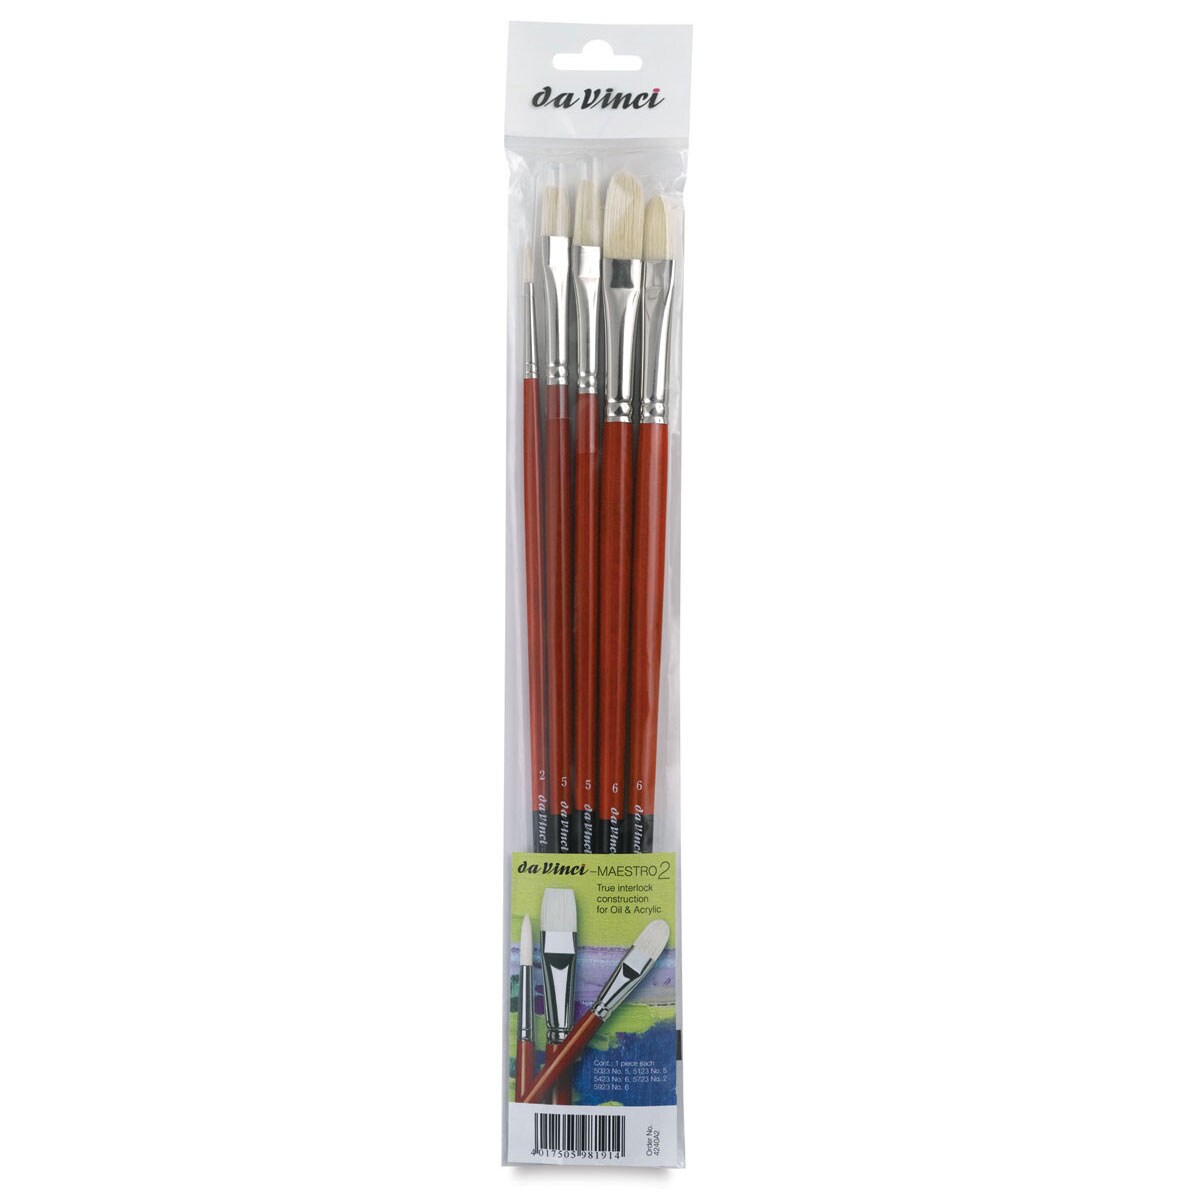 Da Vinci Artist Brush Set - Maestro Bristle, Set of 5